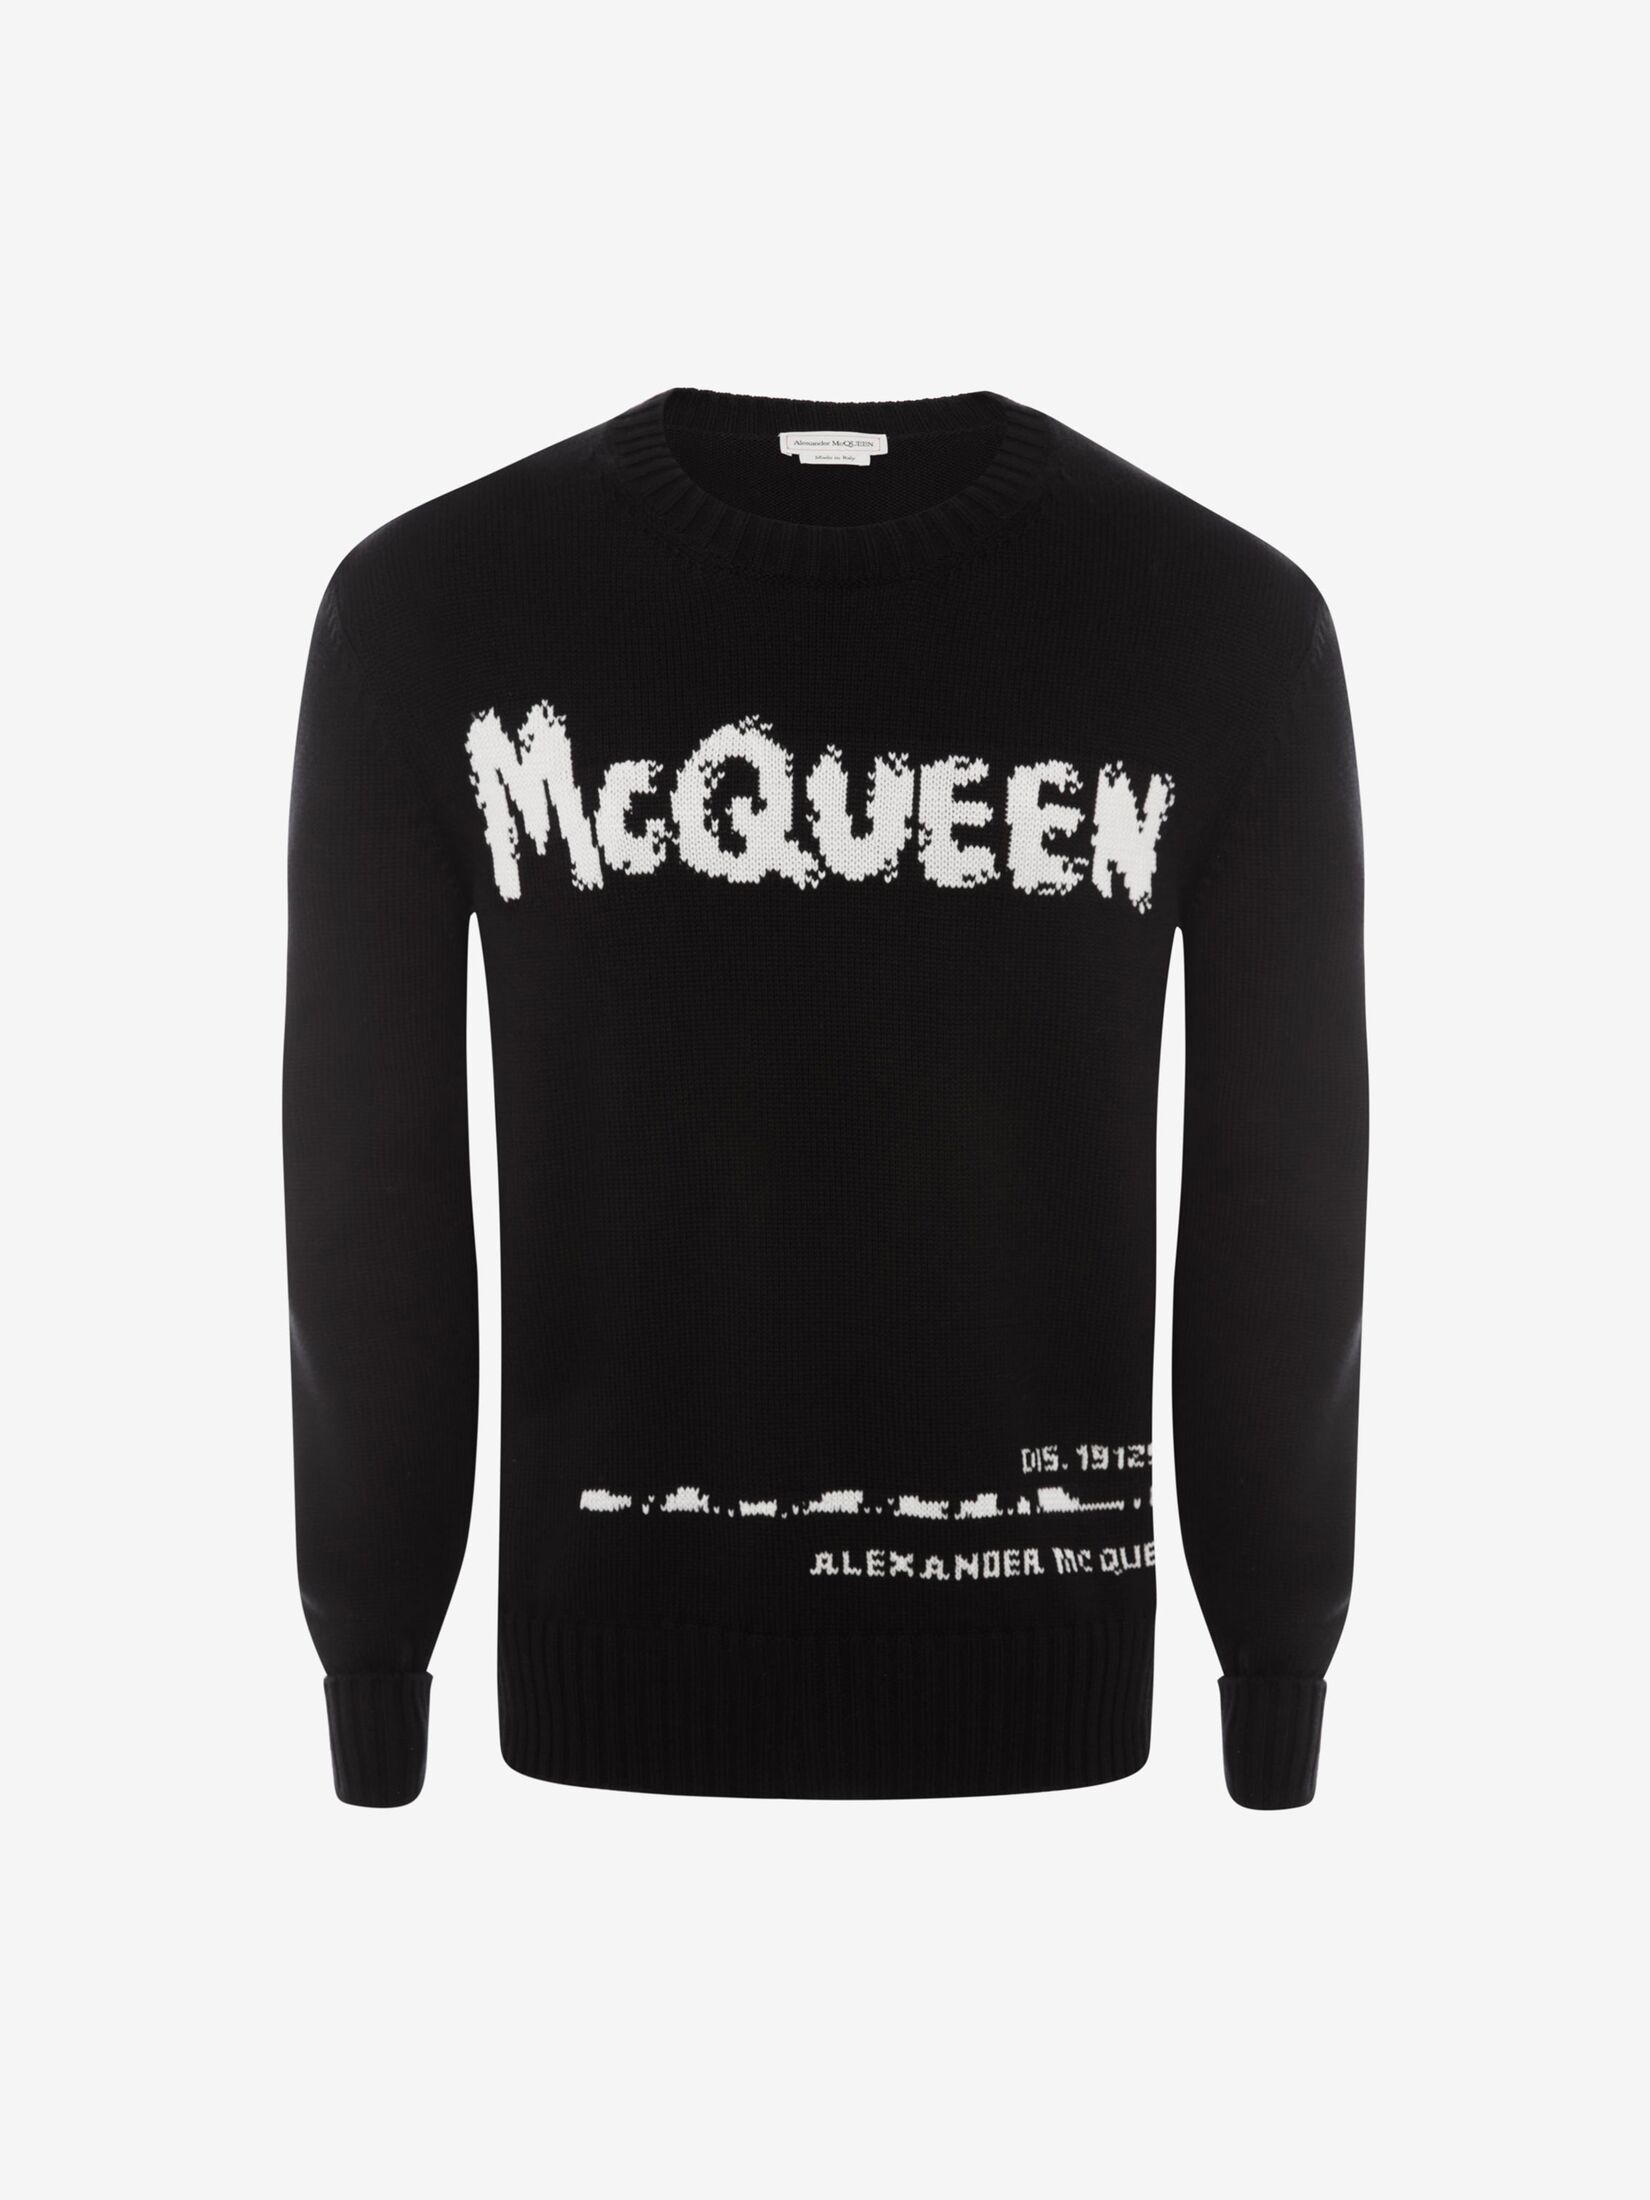 McQueen Graffiti Crew Neck Sweater in Black | Alexander McQueen US